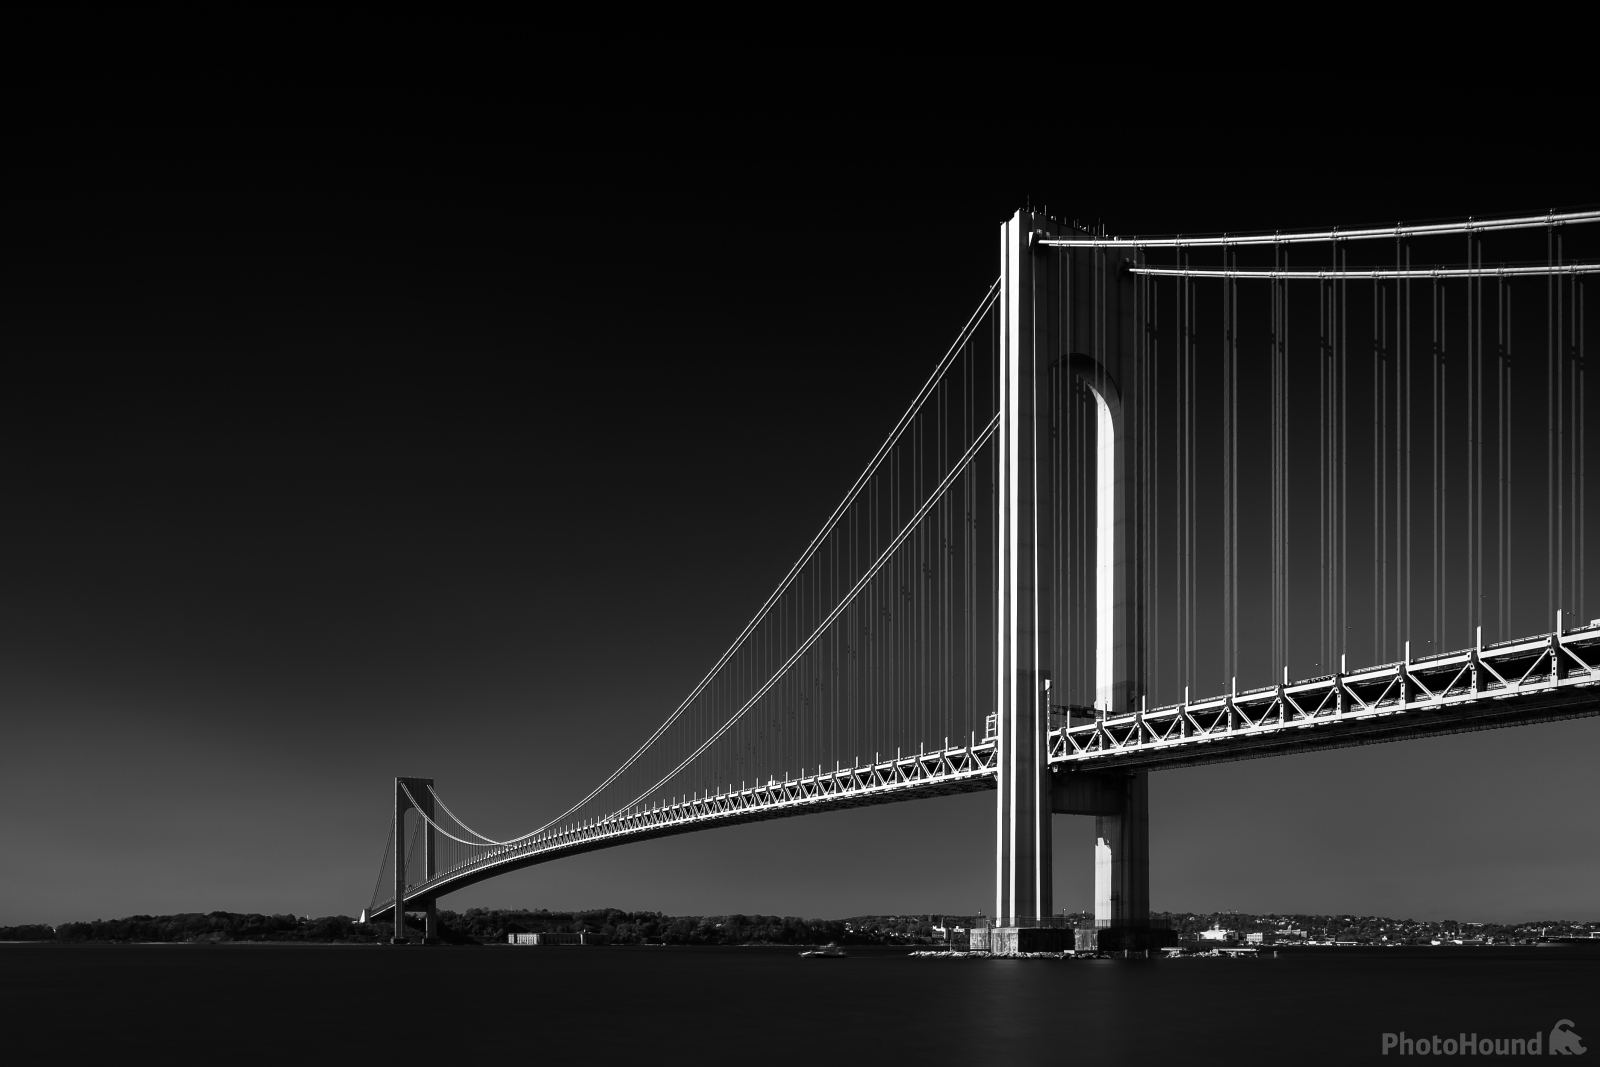 Image of Verrazzano-Narrows Bridge from Brooklyn by VOJTa Herout